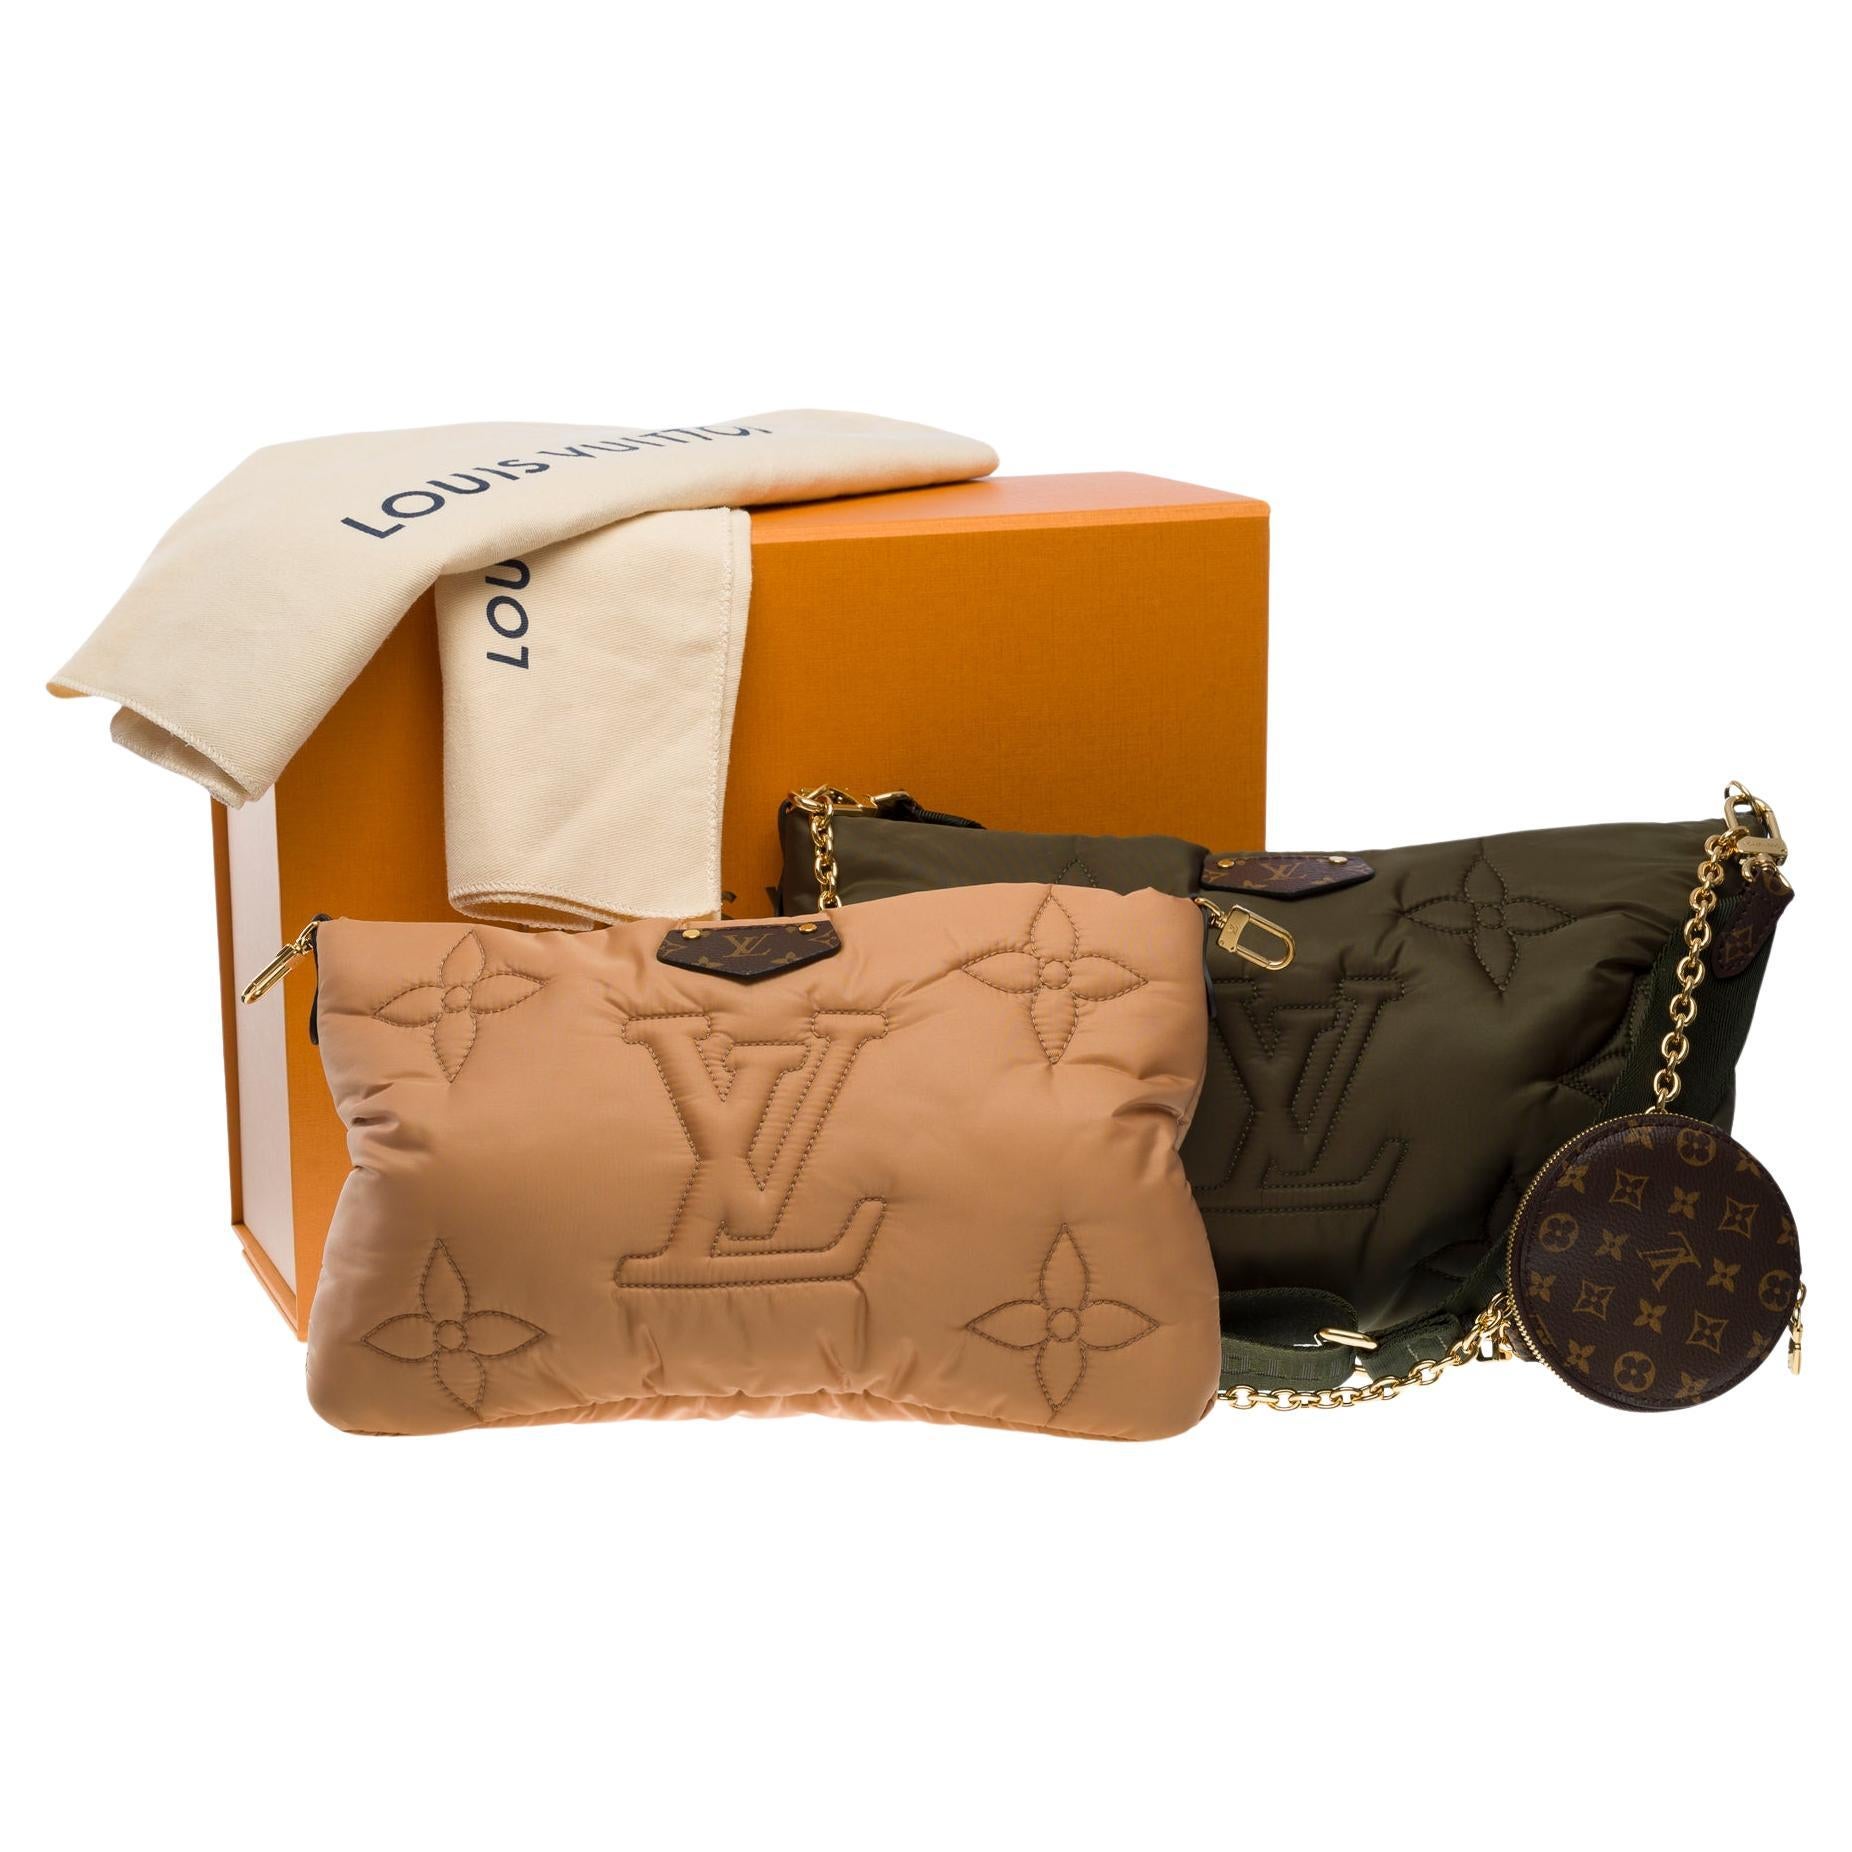 New Louis Vuitton Pillow Maxi Pochette shoulder bag in khaki/Beige nylon, GHW For Sale